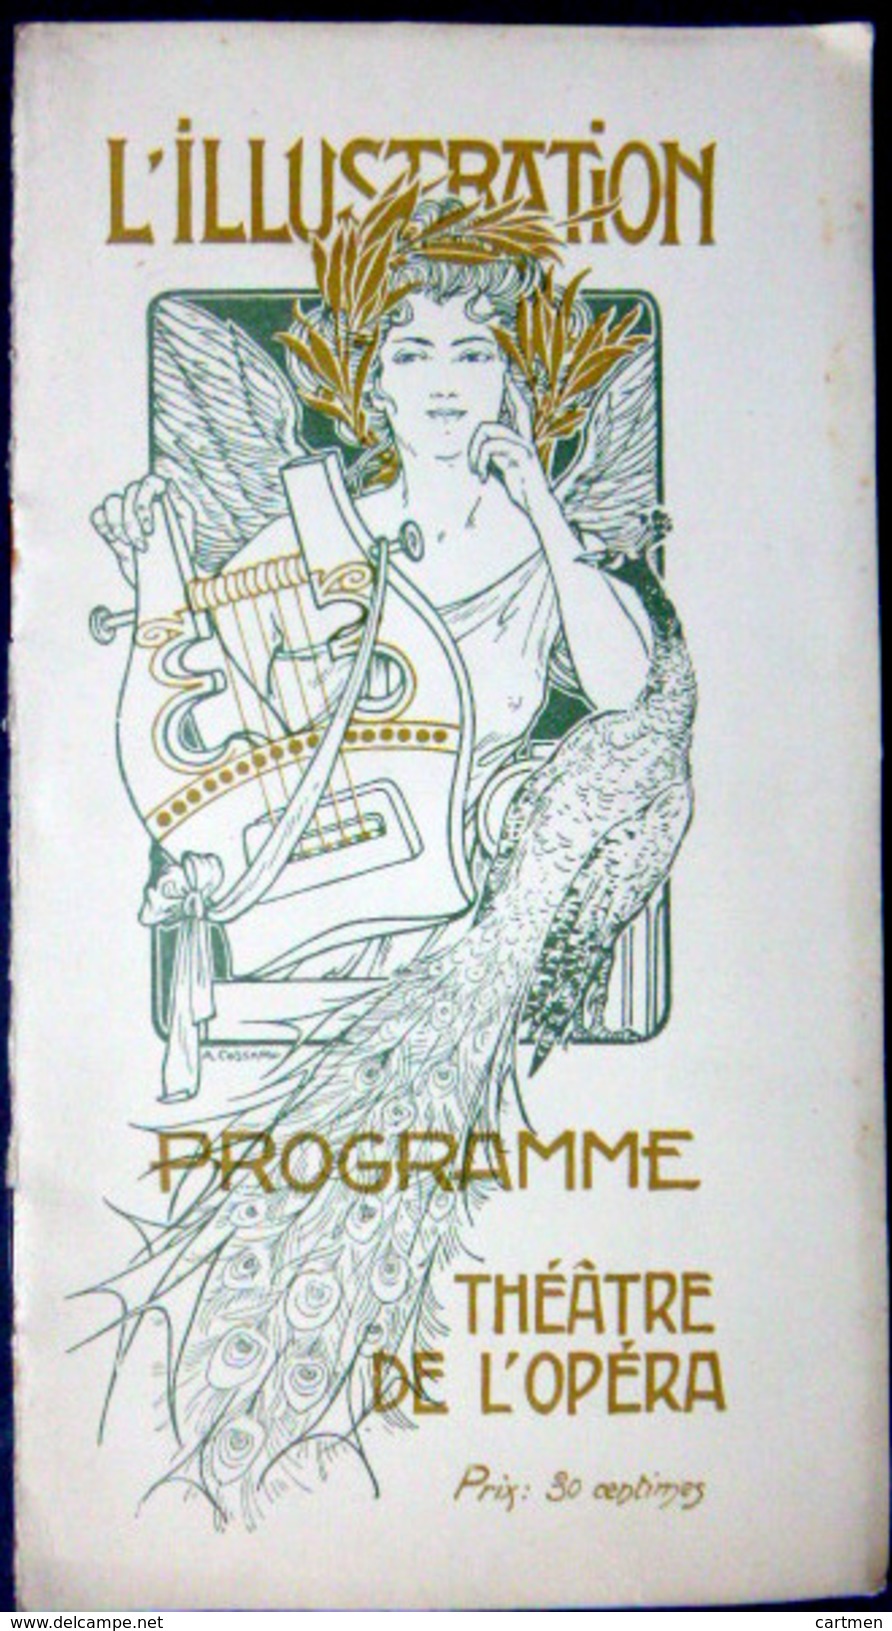 COSSARD PROGRAMME THEATRE DE L'OPERA  WAGNER 22 NOVEMBRE 1902 L'ILLUSTRATION BELLE COMPOSITION BEL ETAT  STYLE MUCHA - Programmes